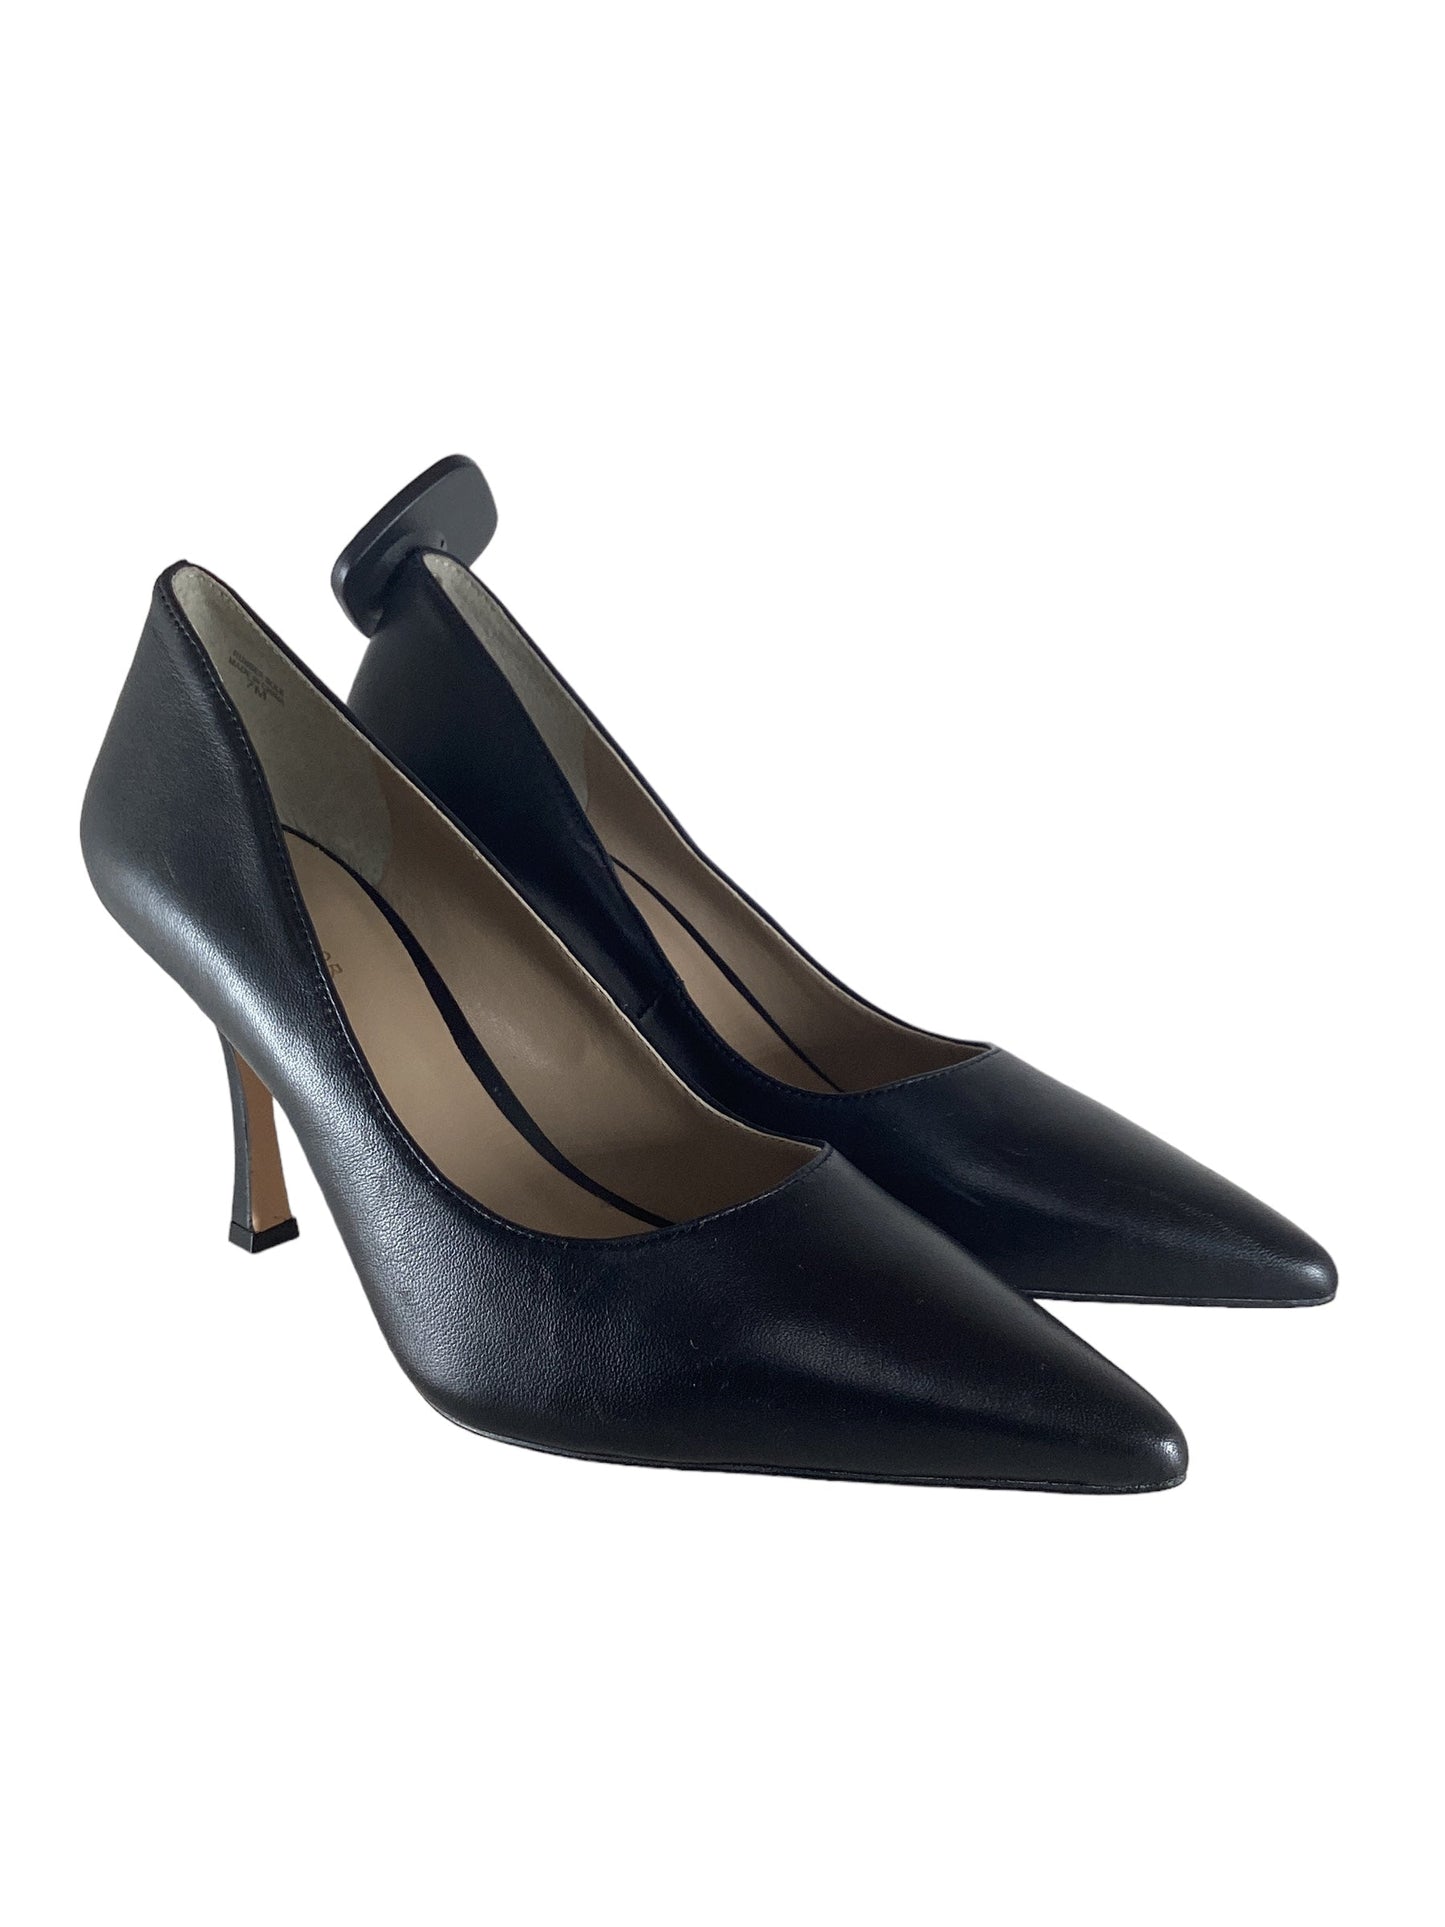 Black Shoes Heels Stiletto Ann Taylor, Size 7